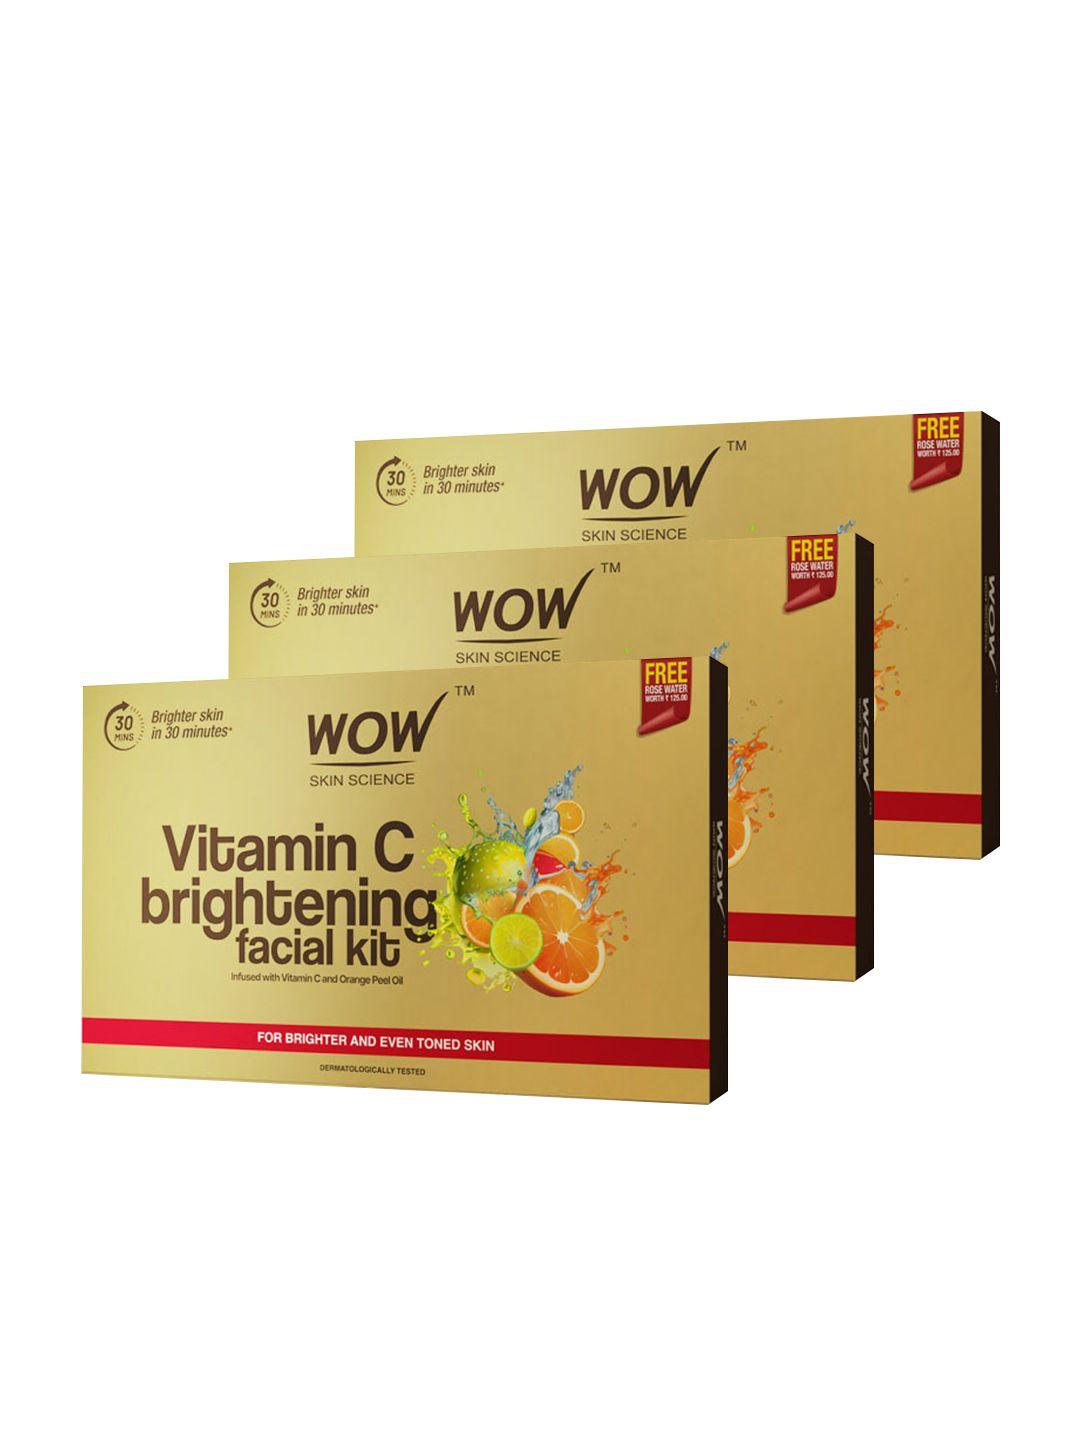 wow skin science set of 3 vitamin c brightening facial kit with free rose water